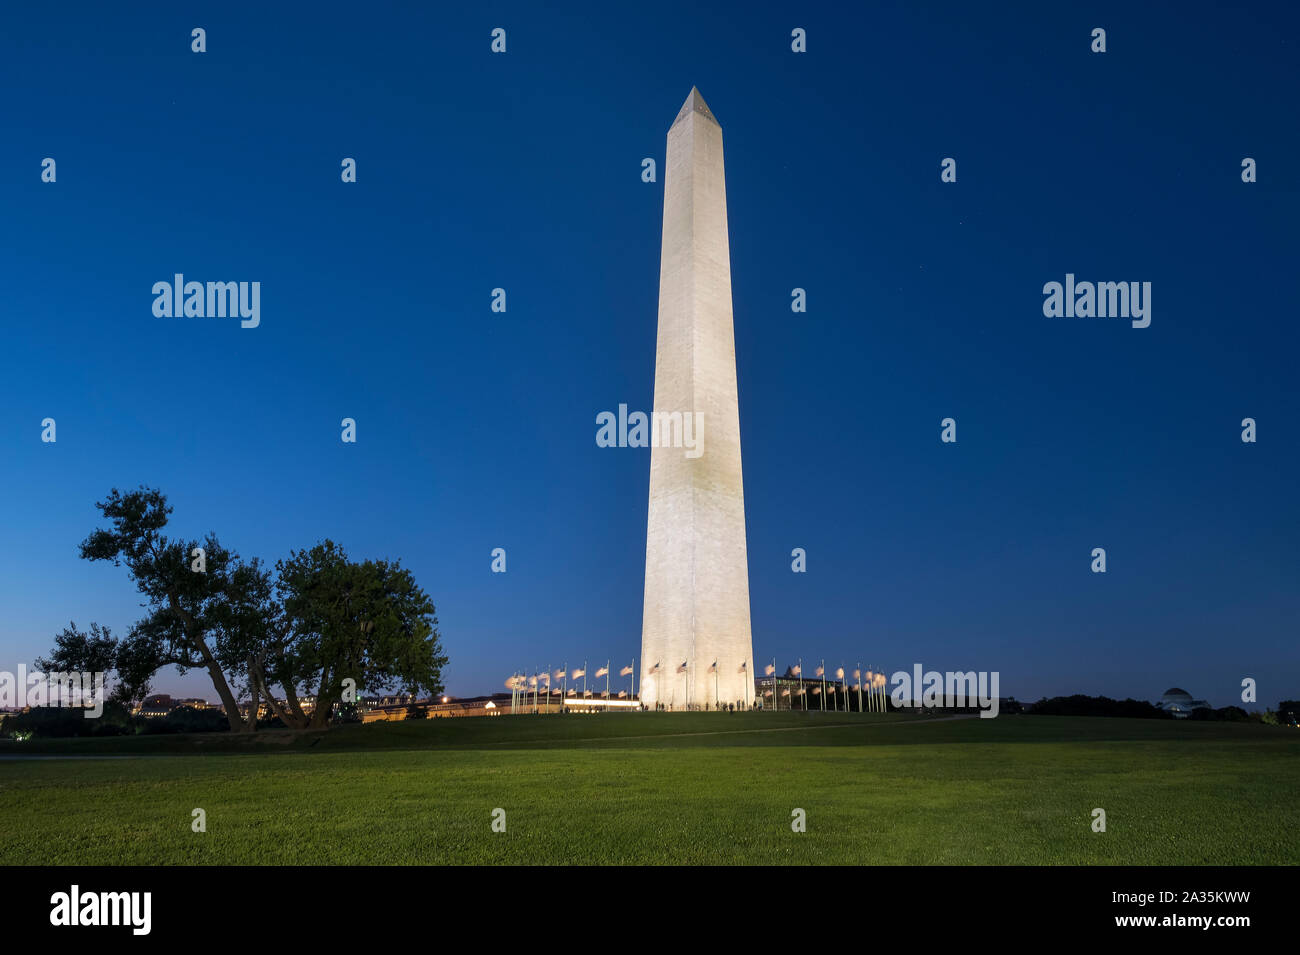 The Washington Monument at night, National Mall, Washington DC, USA Stock Photo